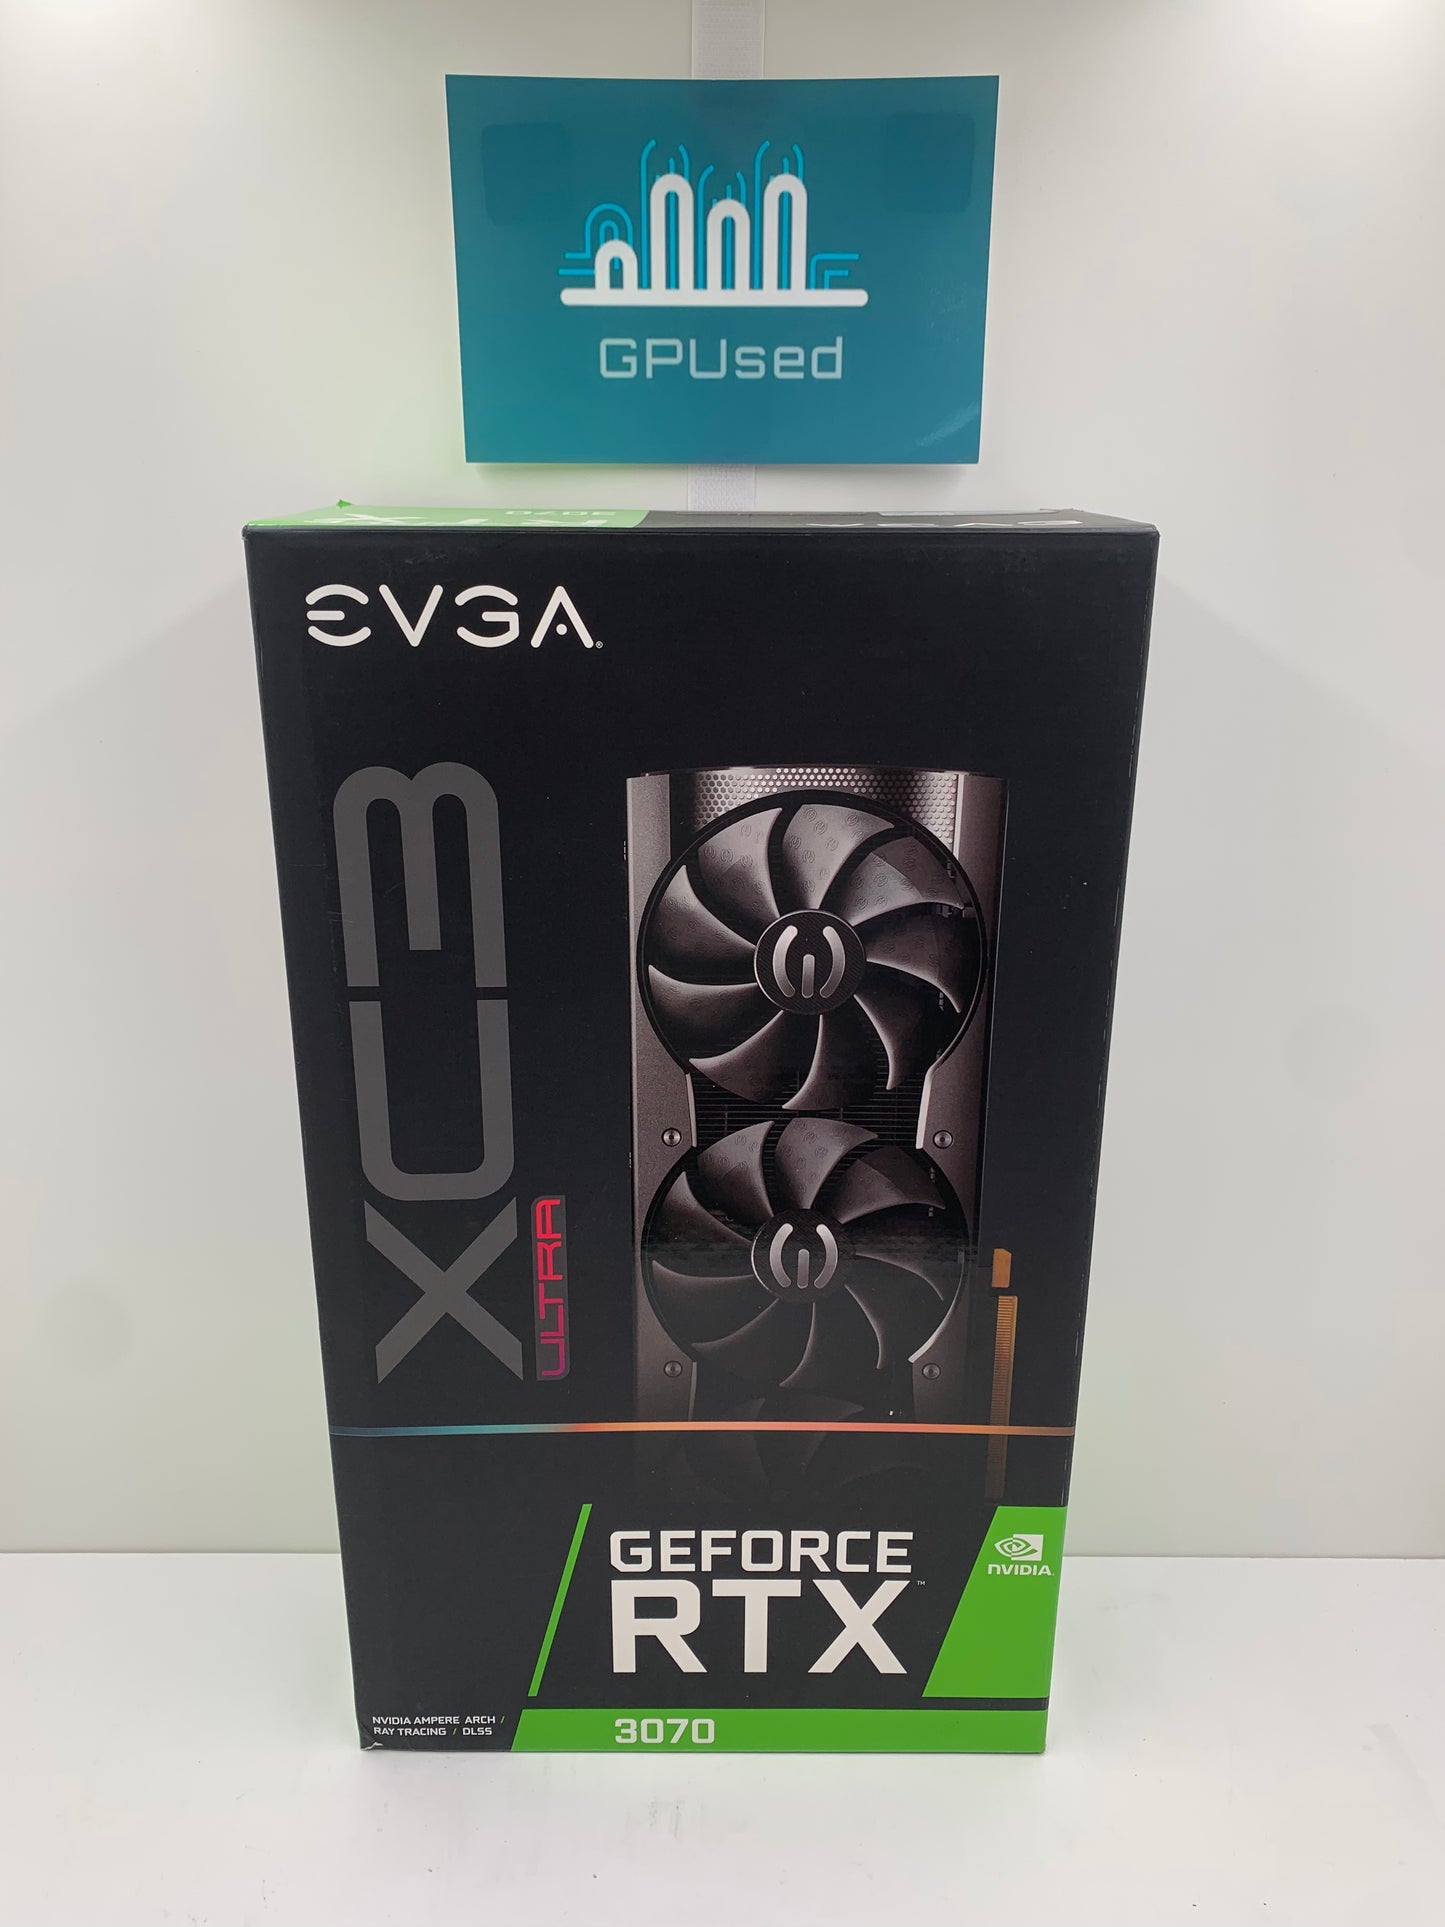 EVGA Nvidia GeForce RTX 3070 XC3 Ultra 8GB GDDR6 - Was £349.99 - A